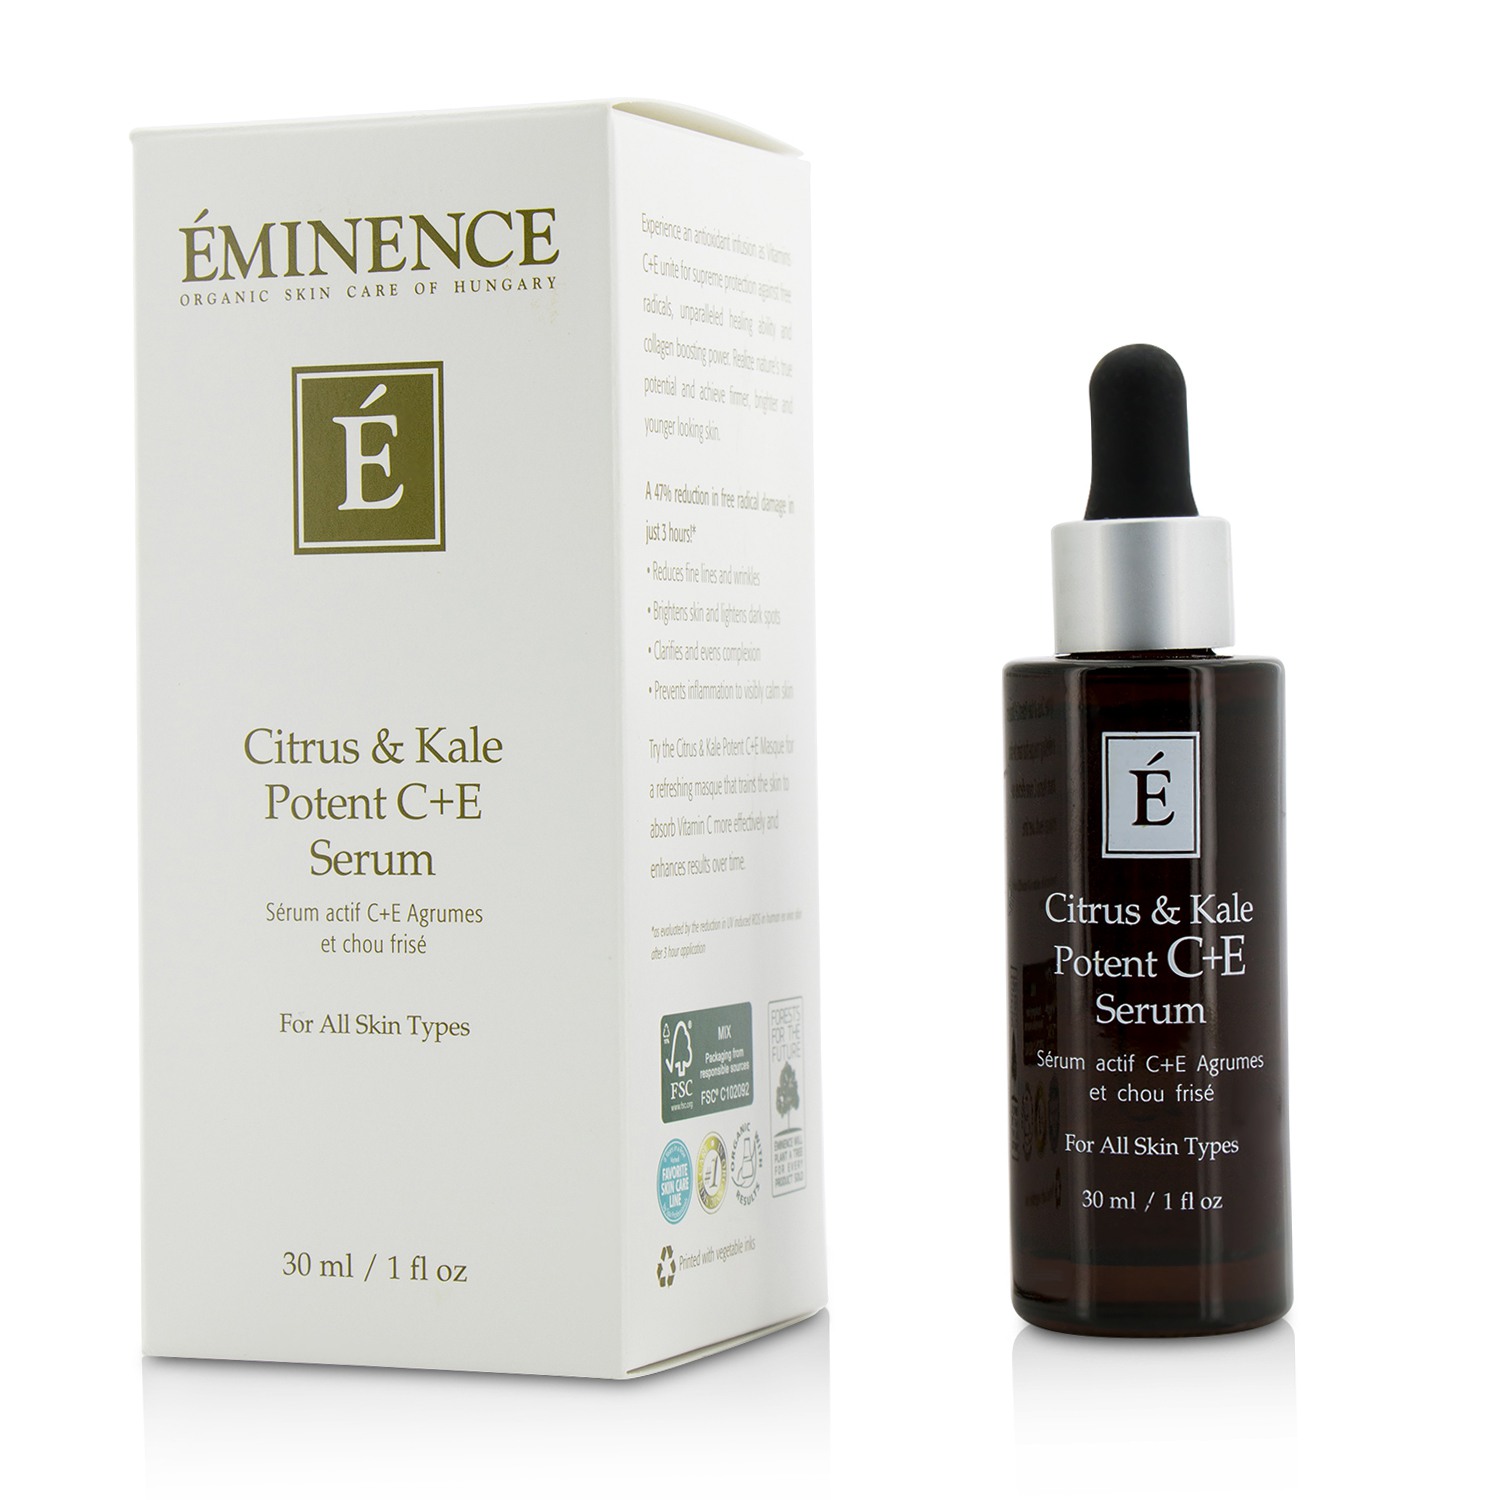 Citrus & Kale Potent C+E Serum - For All Skin Types Eminence Image